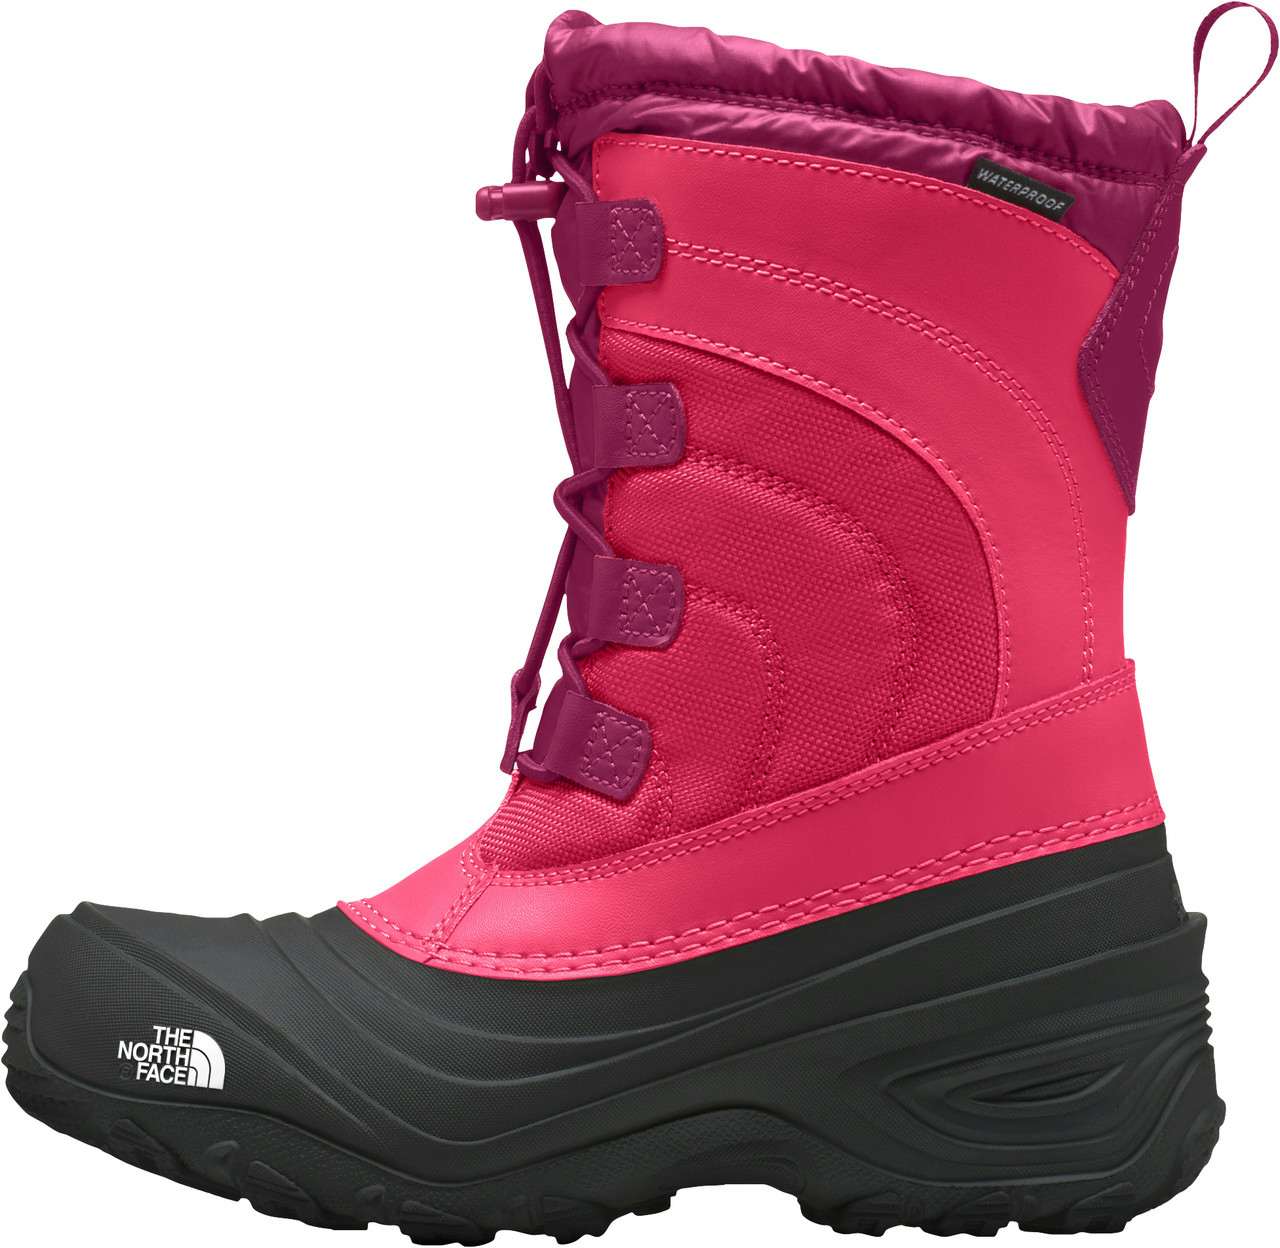 Alpenglow IV Waterproof Winter Boots Cabaret Pink/TNF Black